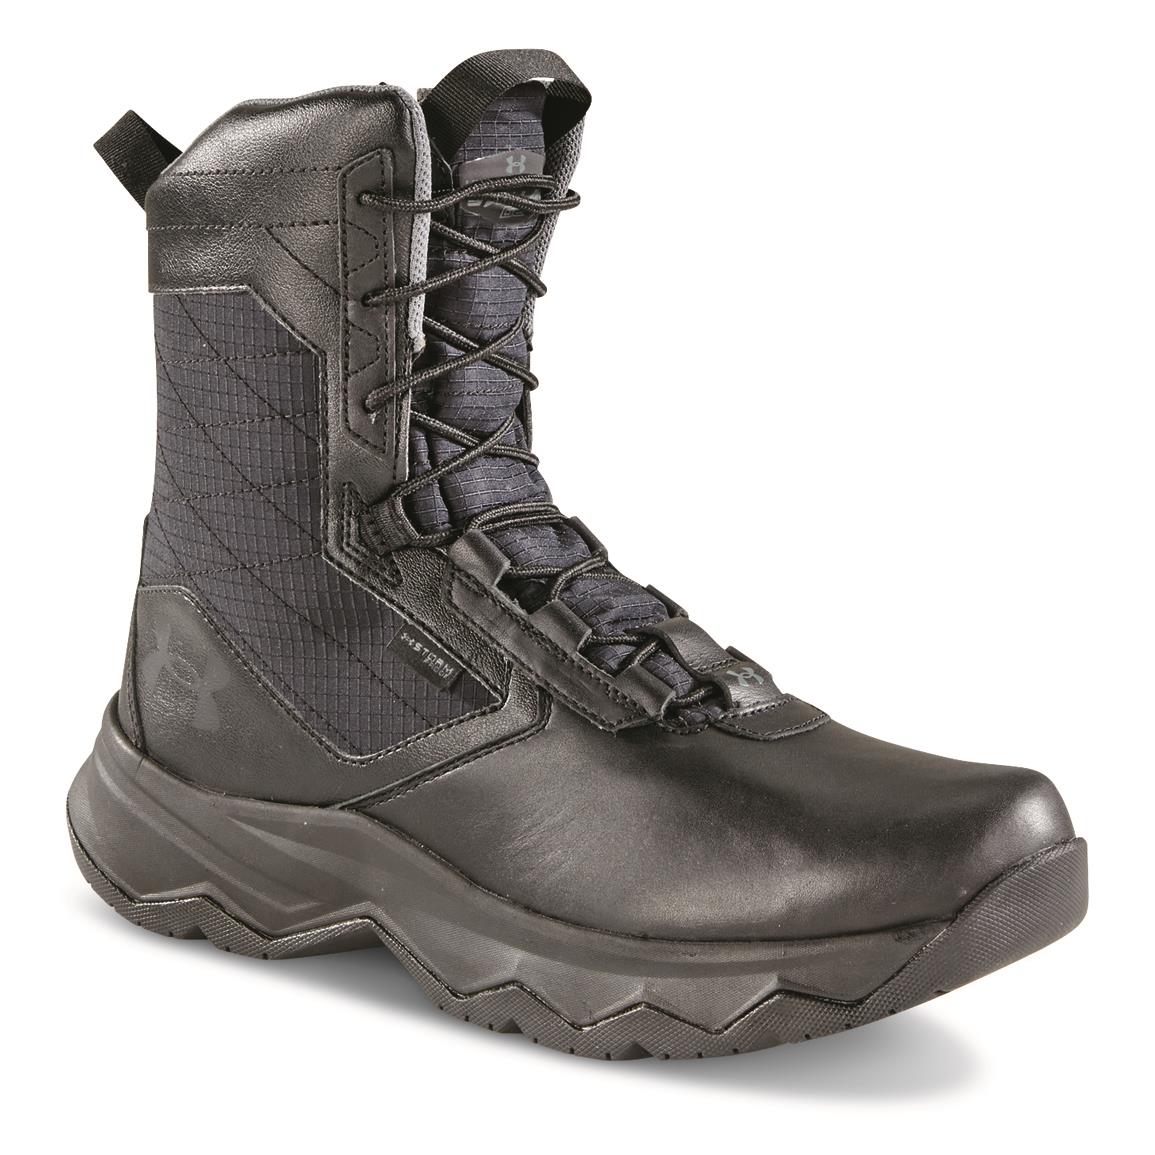 Under Armour Men's Stellar G2 Waterproof Side-Zip Tactical Boots, Black